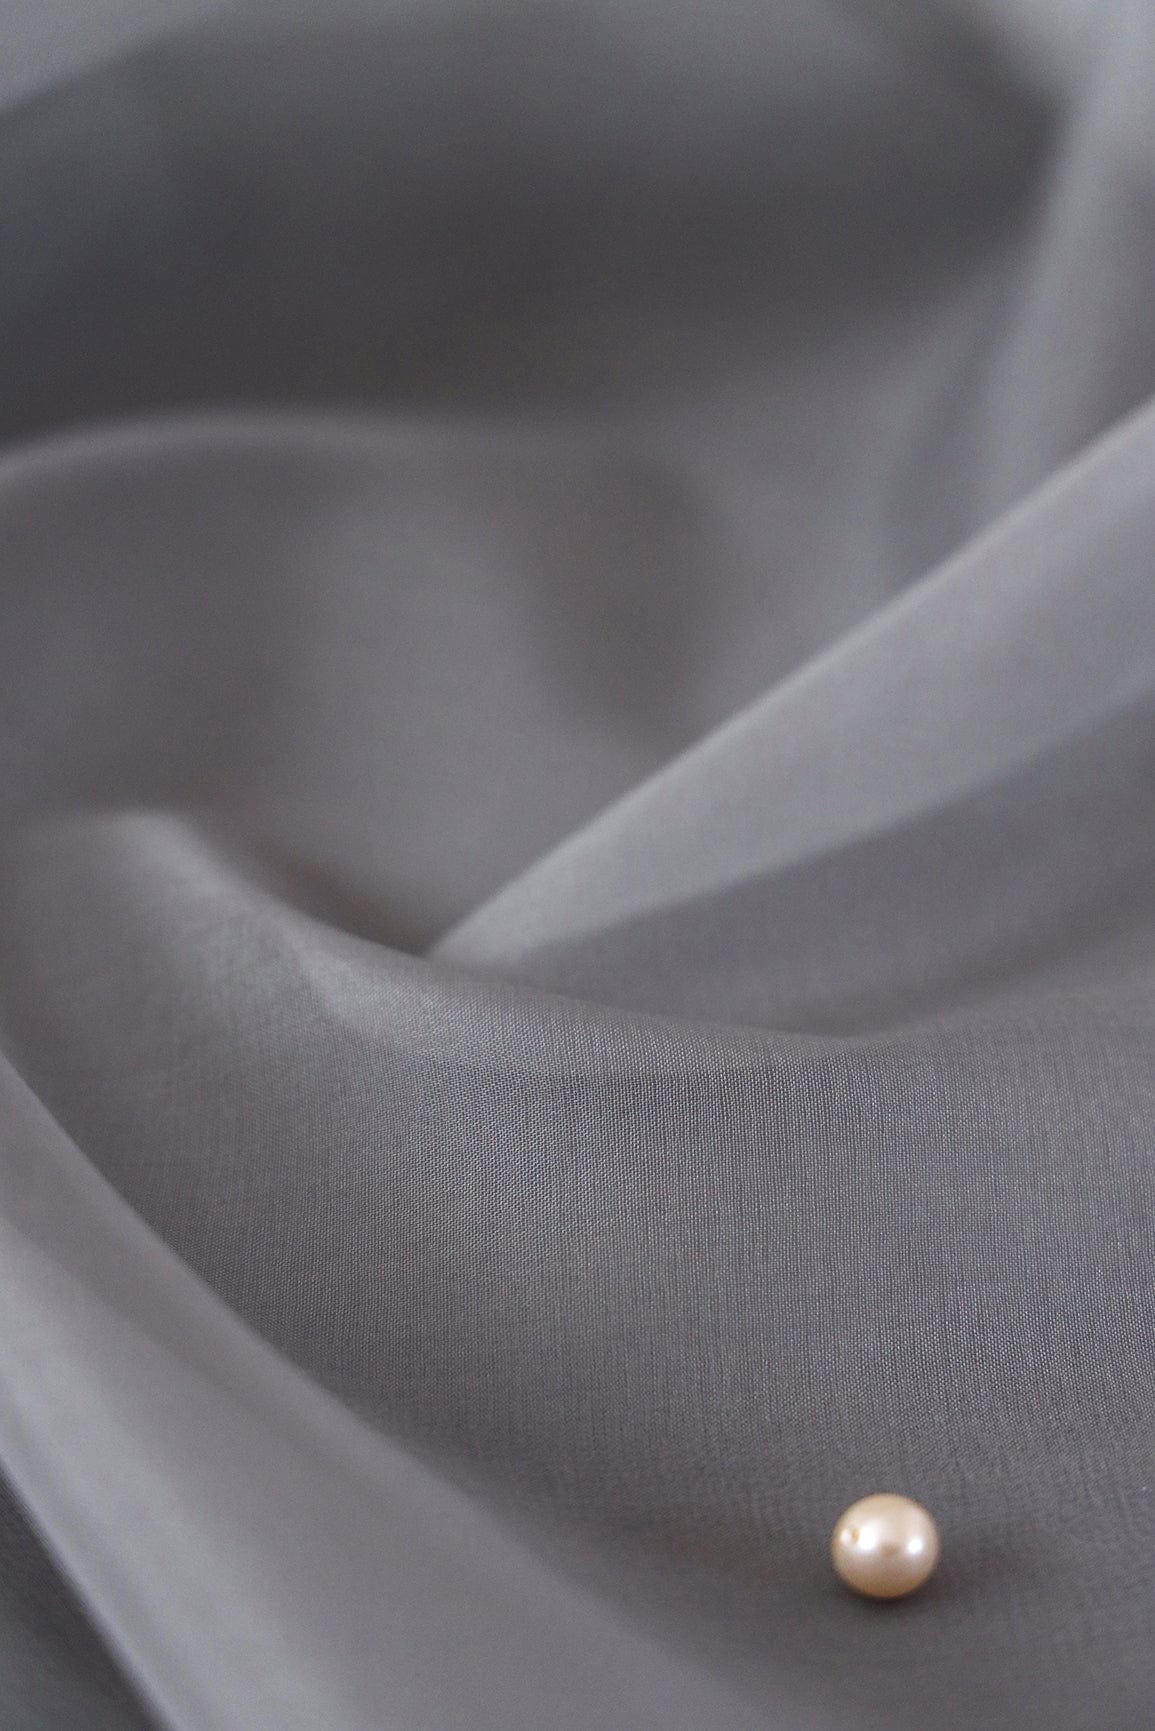 doeraa Plain Dyed Fabrics Grey Dyed Organza Fabric